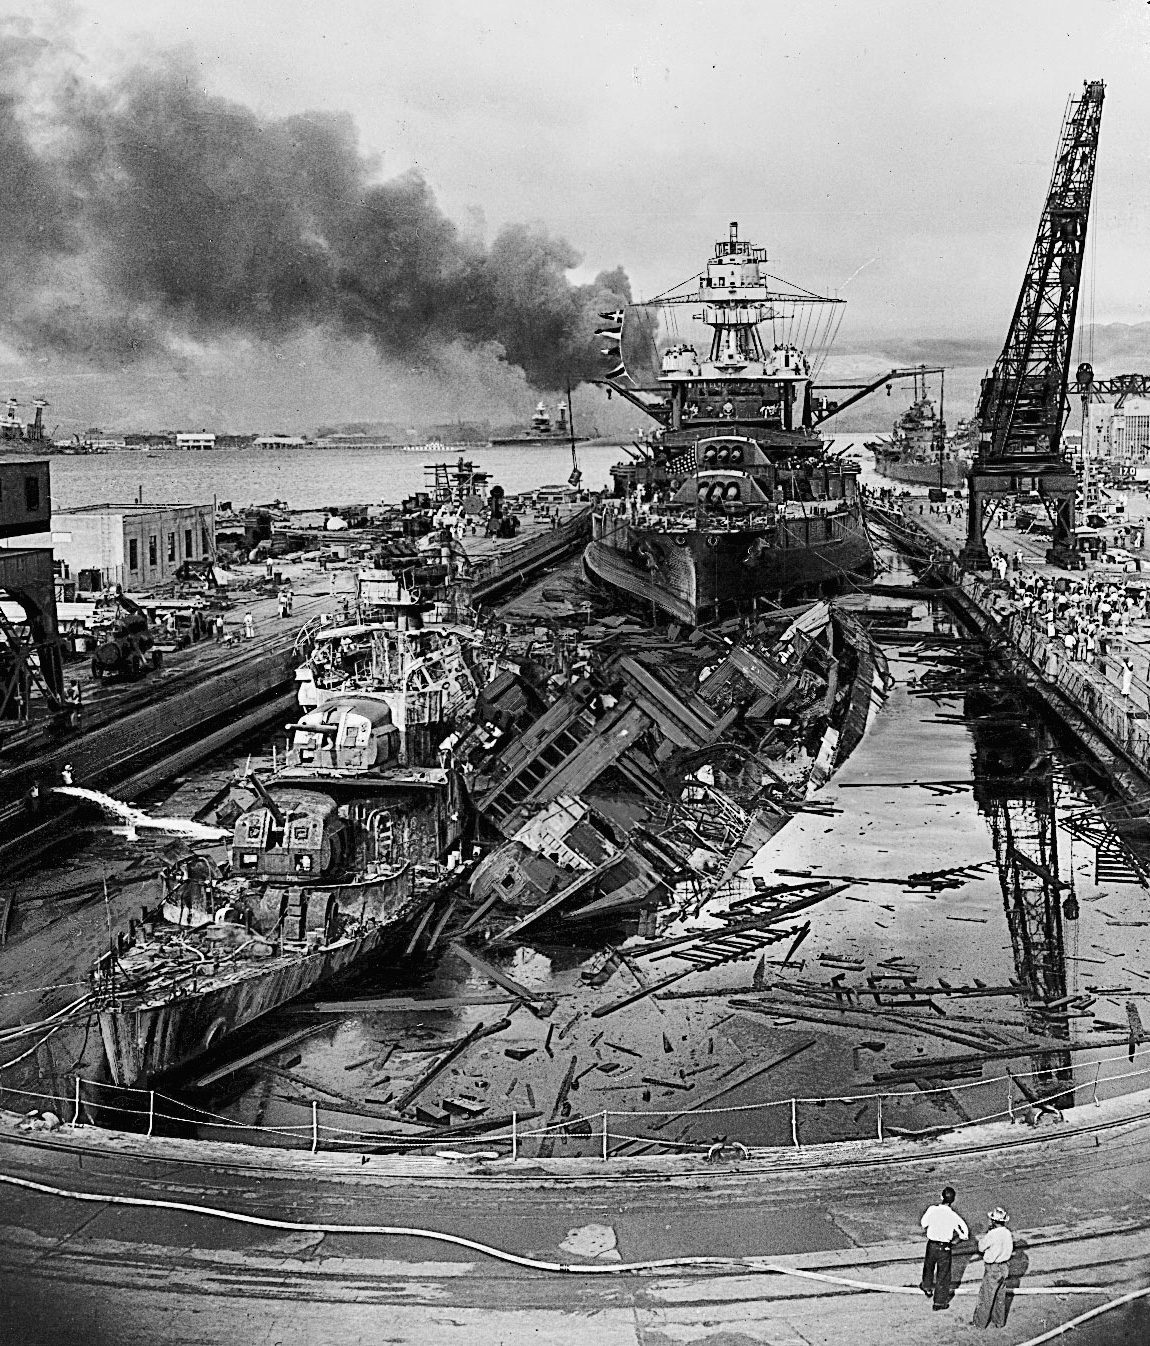 battleship-uss-pennsylvania-dock-destroyers-cassin-downes-december-7-1941.jpg